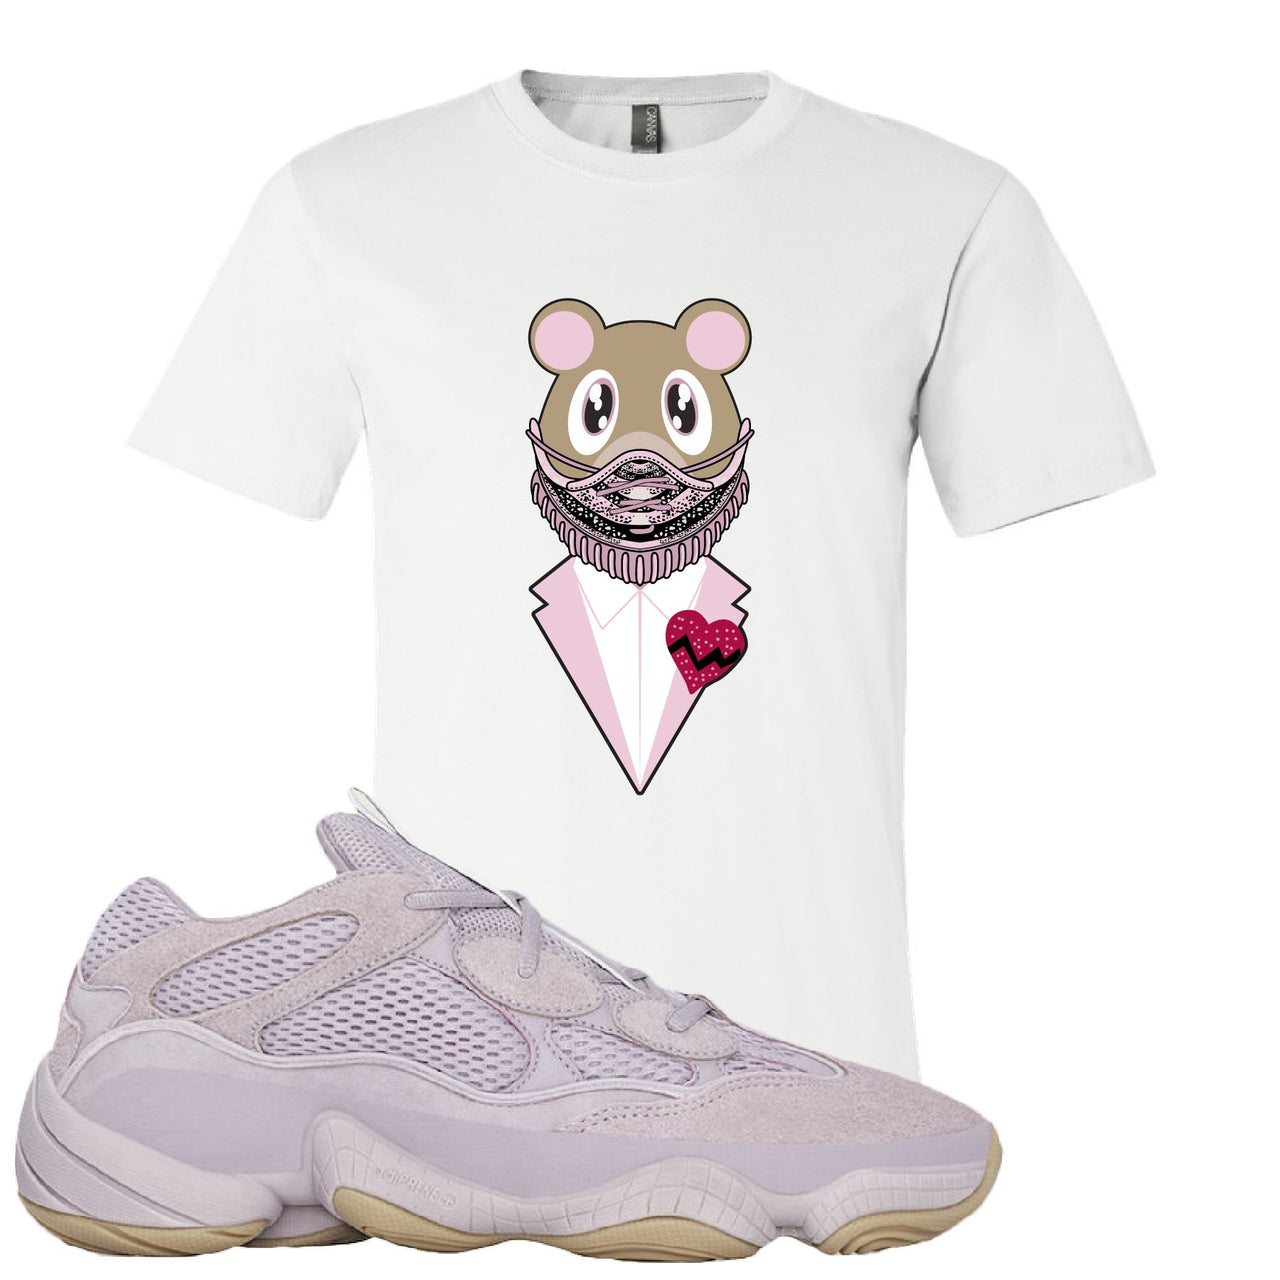 Yeezy 500 Soft Vision Yeezy Sneaker Mask White Sneaker Hook Up Women's T-Shirt